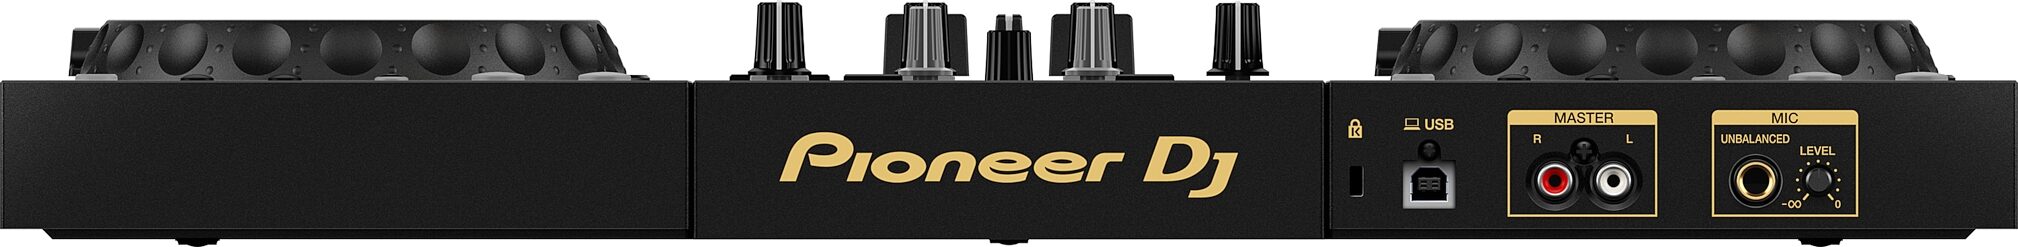 Pioneer DJ DDJ-400 Controller for Rekordbox DJ